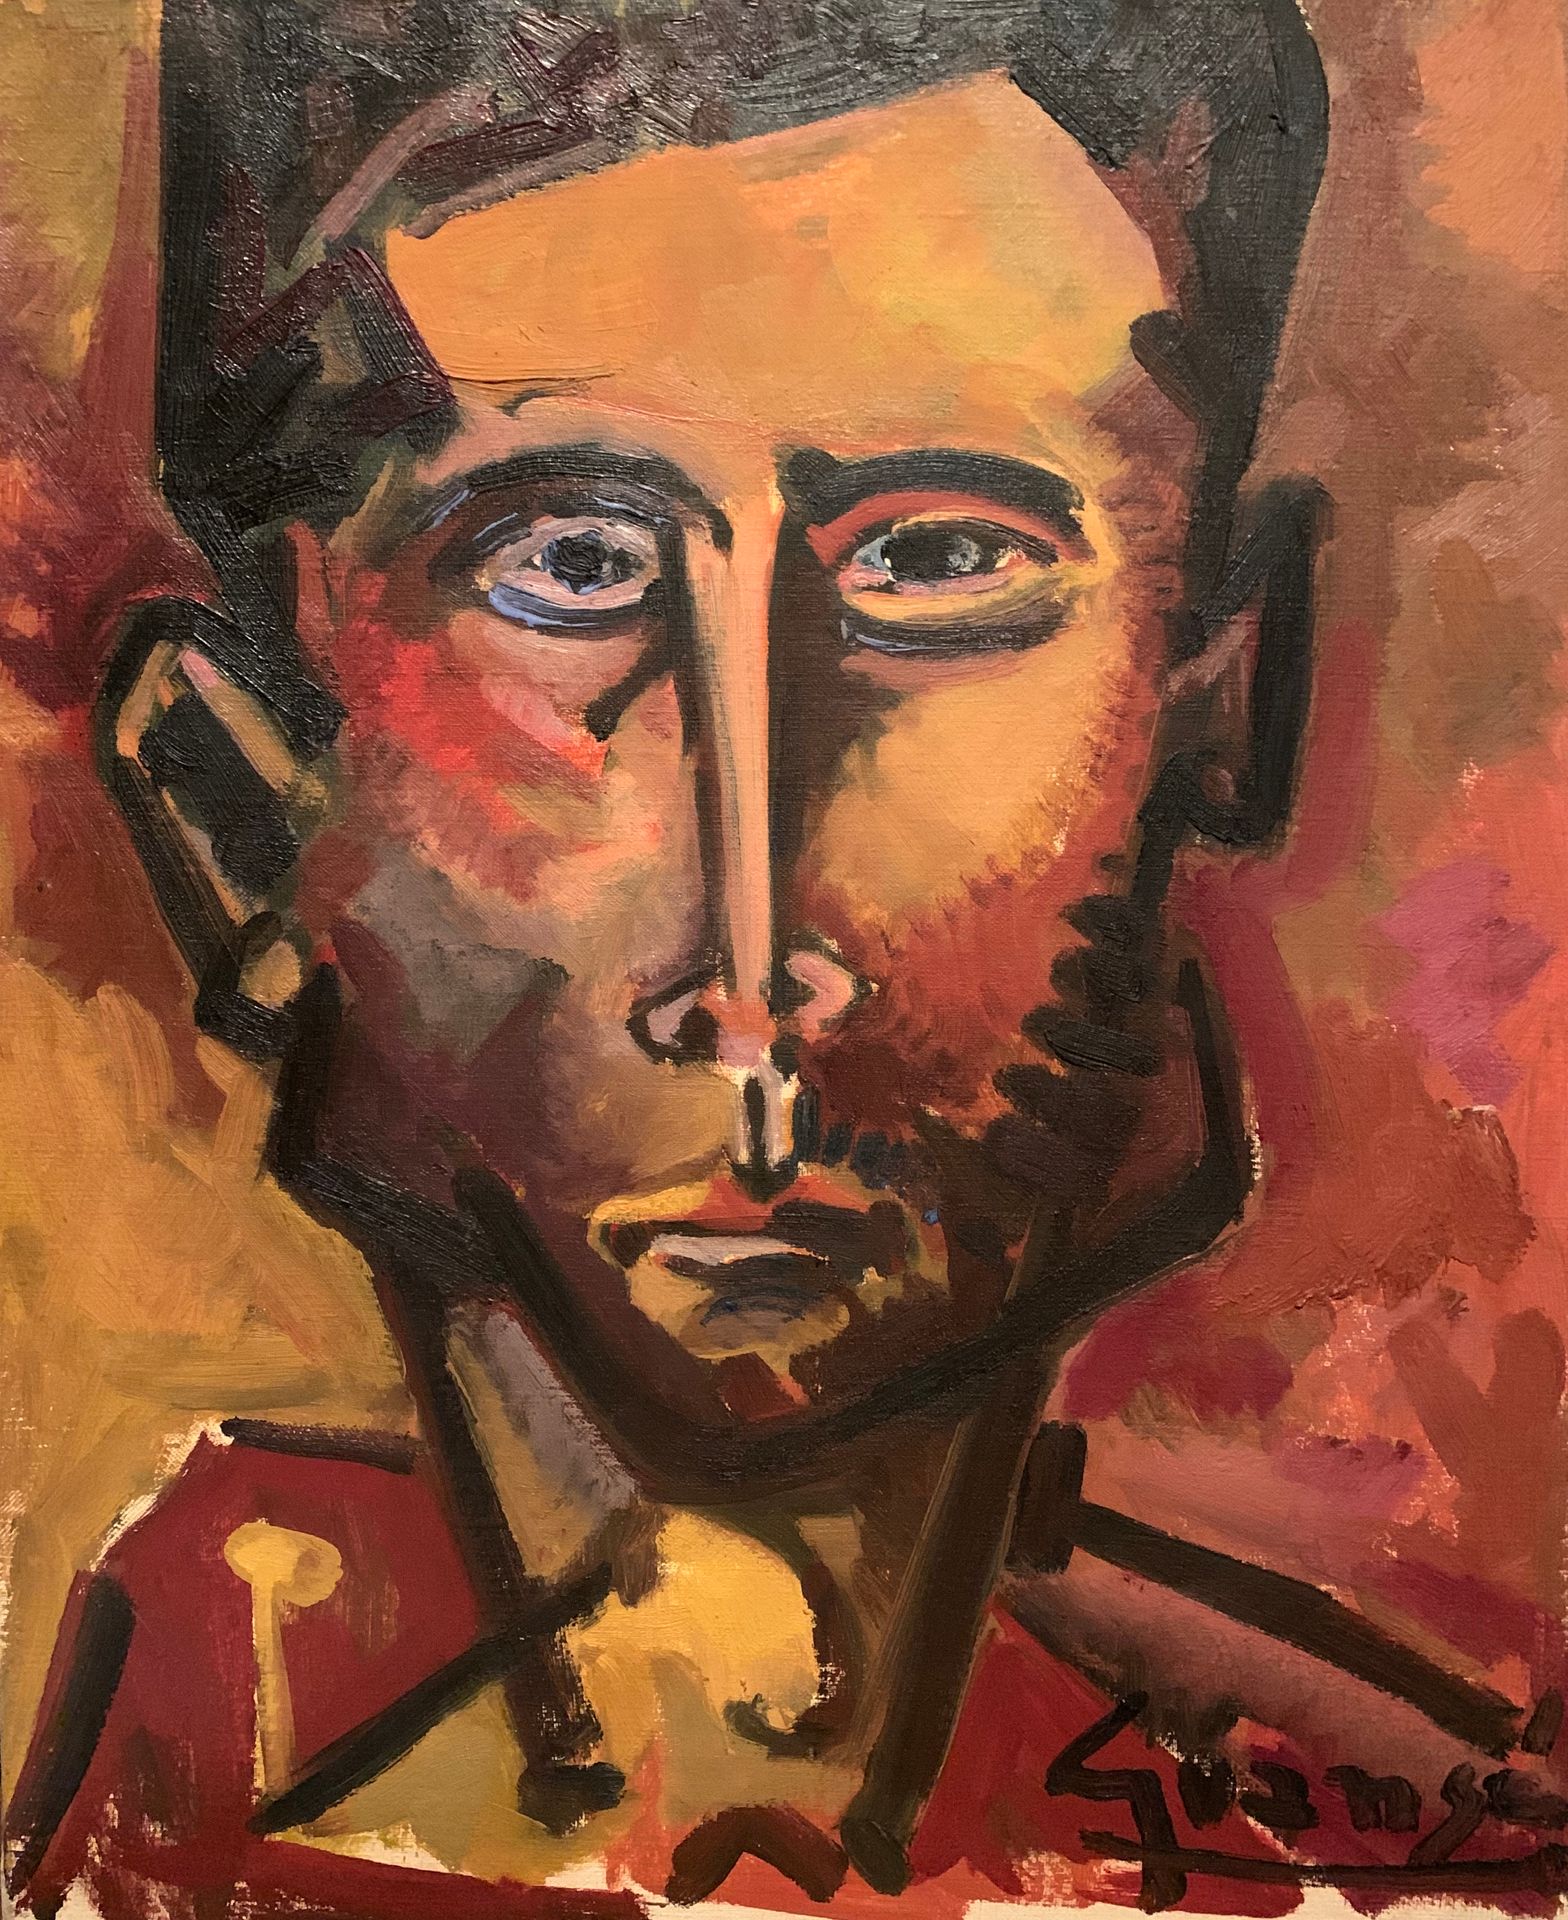 Null 安东尼奥-关斯(1926-2008)

一个穿红衣服的人的肖像，1957年

右下角签名的布面油画，背面有副署和日期

46 x 38 cm